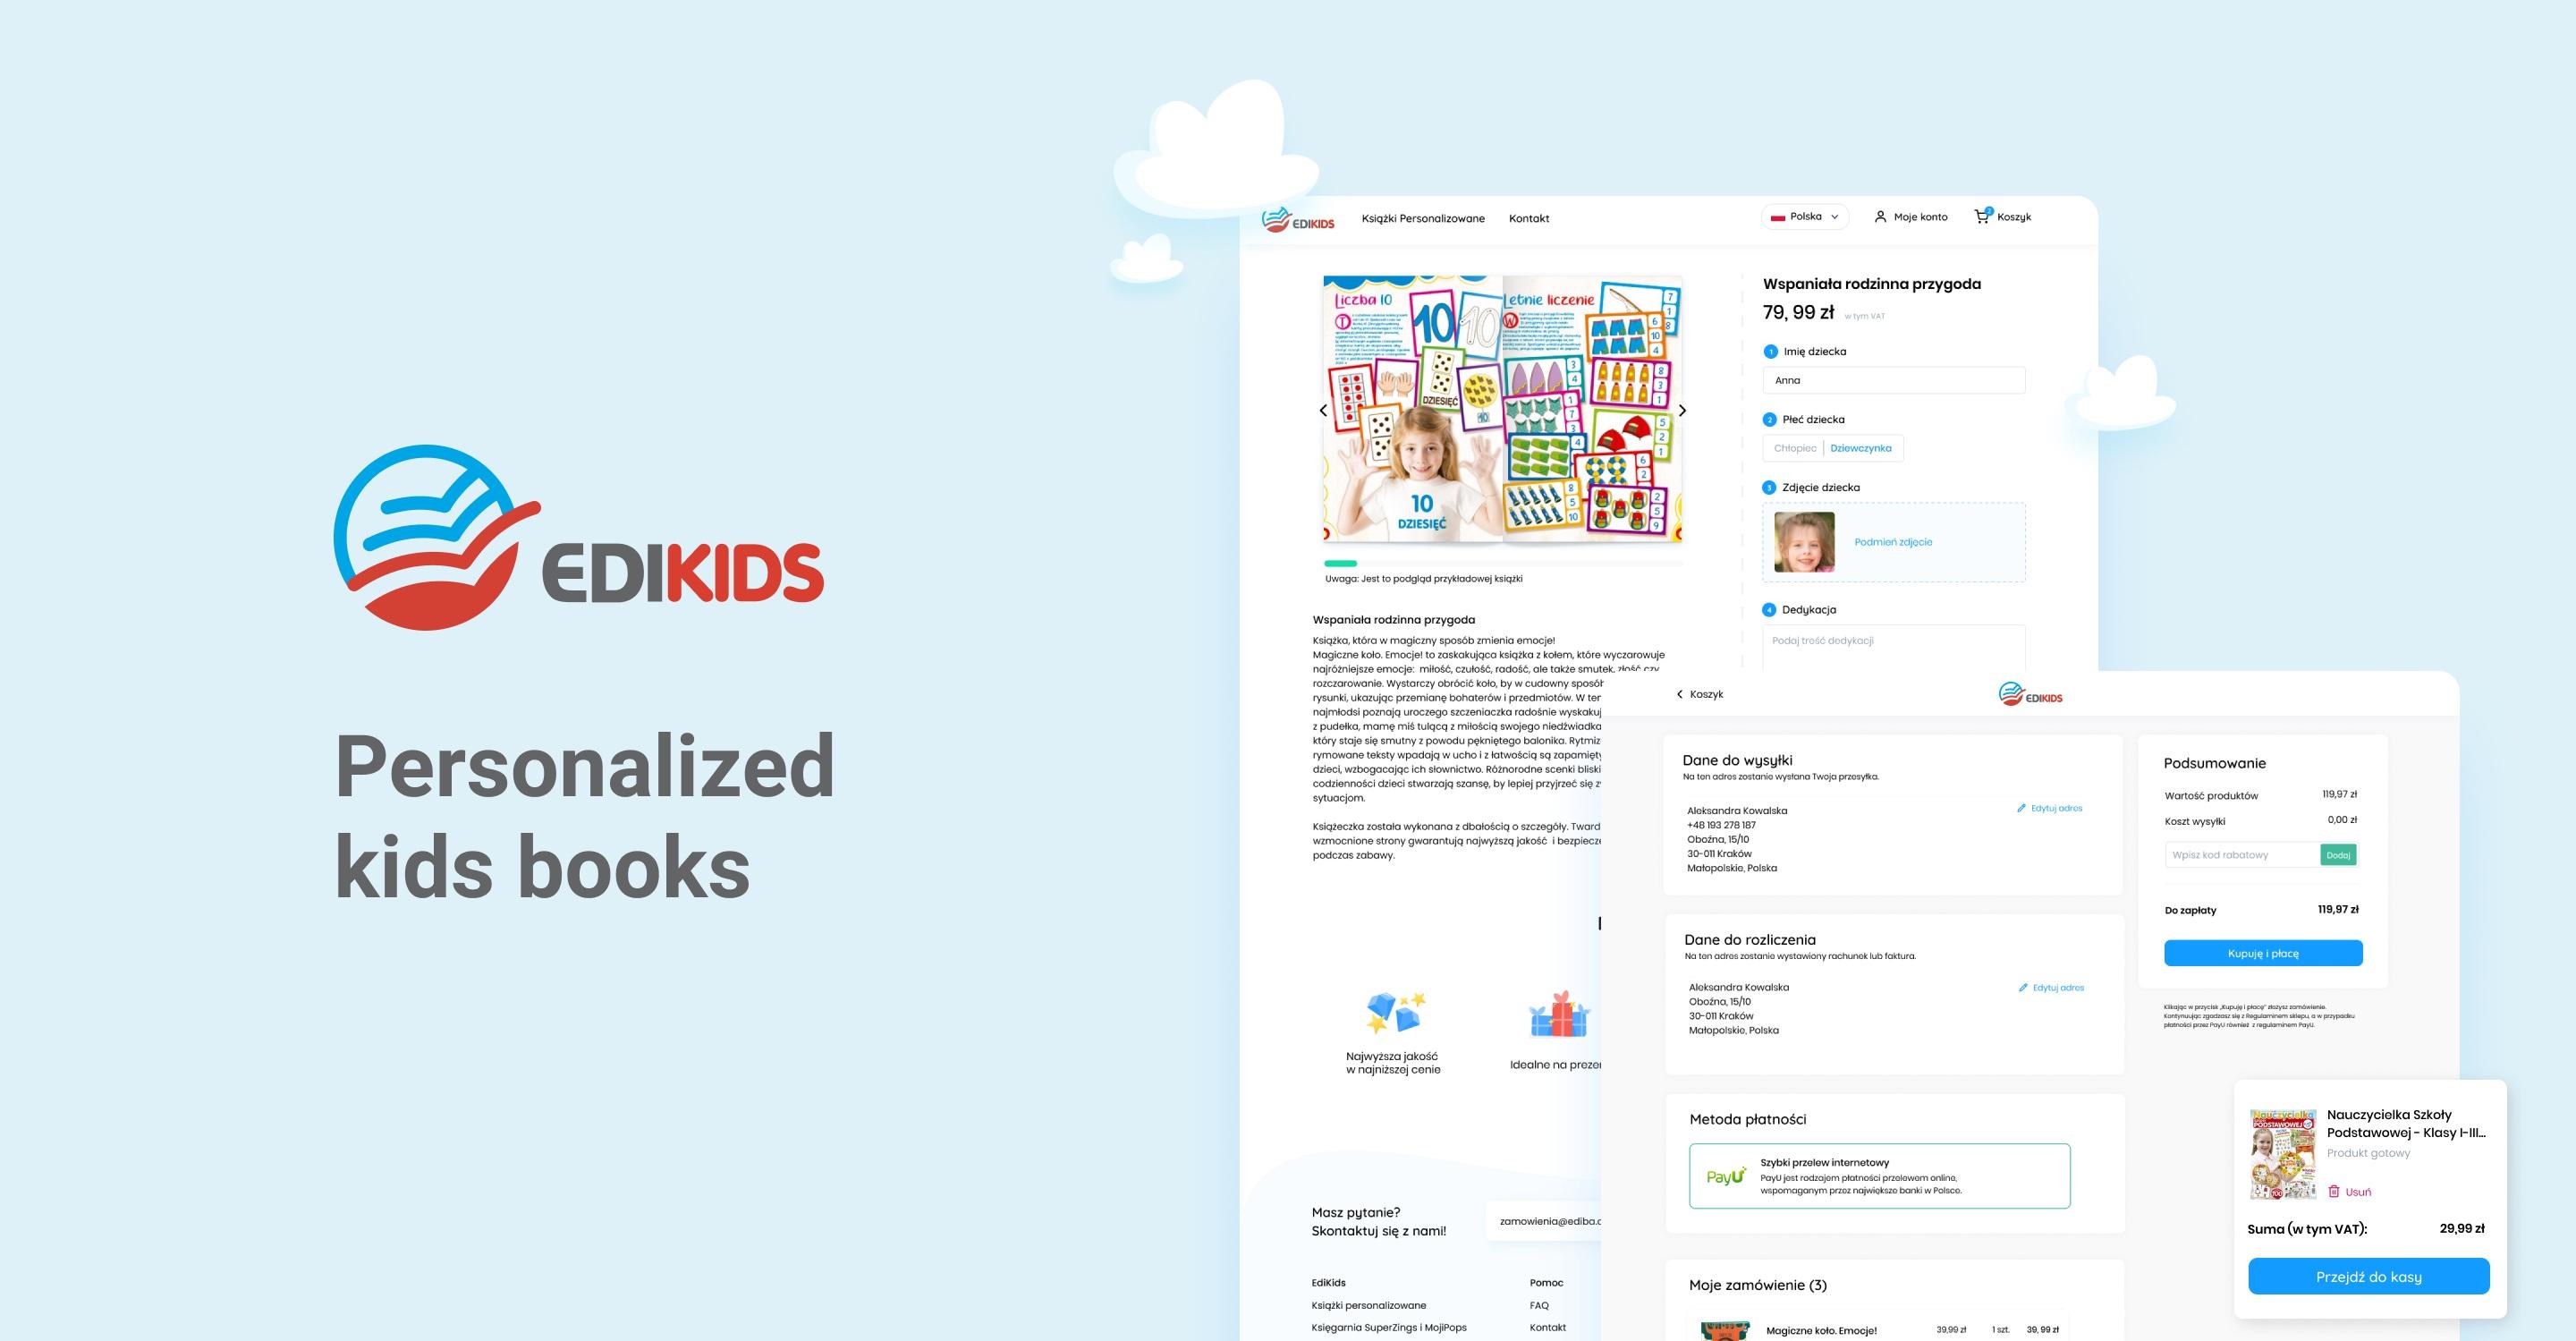 Personalized kids books